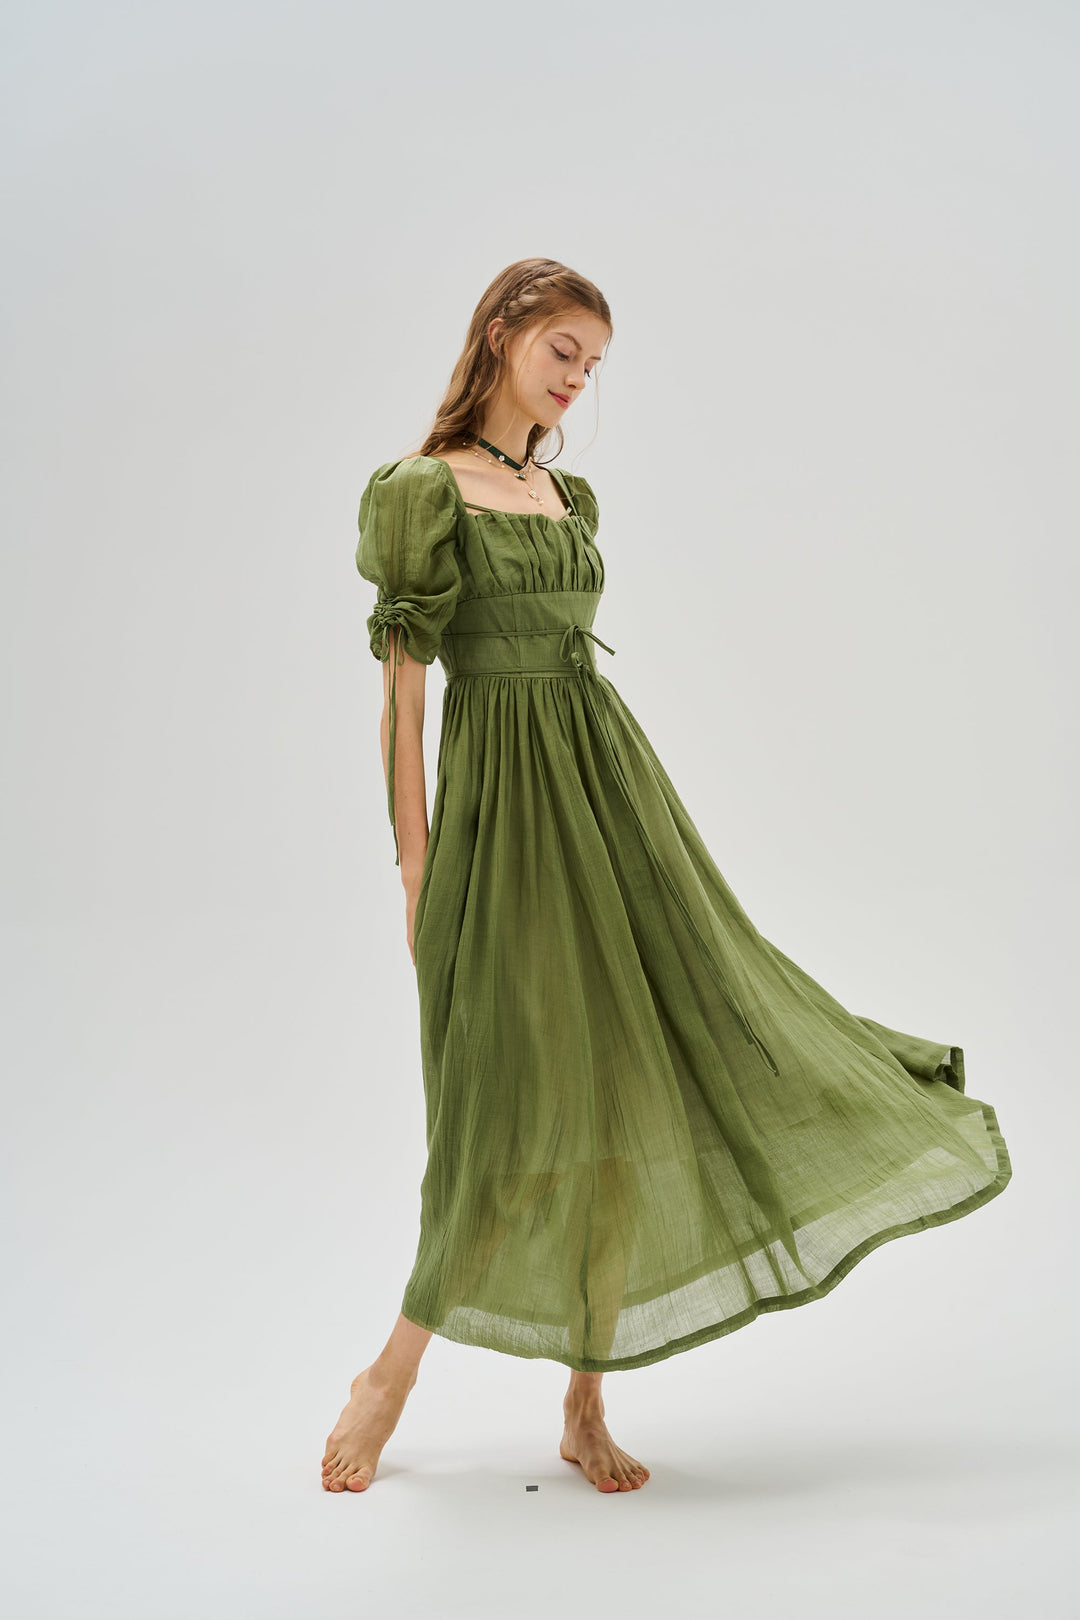 Monette 27 | Corset Linen Dress